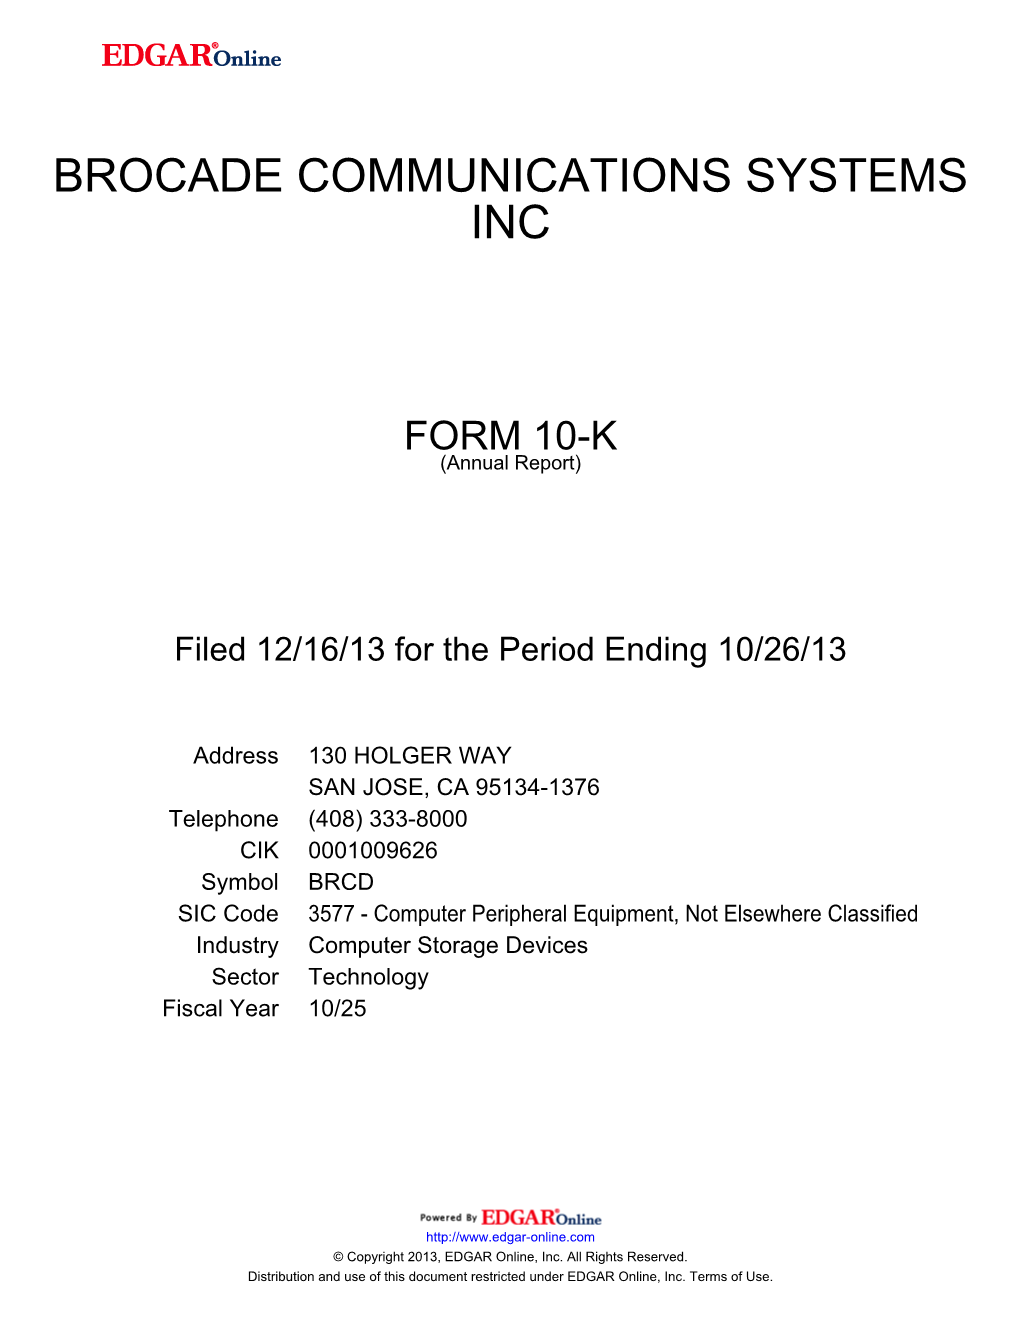 Brocade Communications Systems Inc